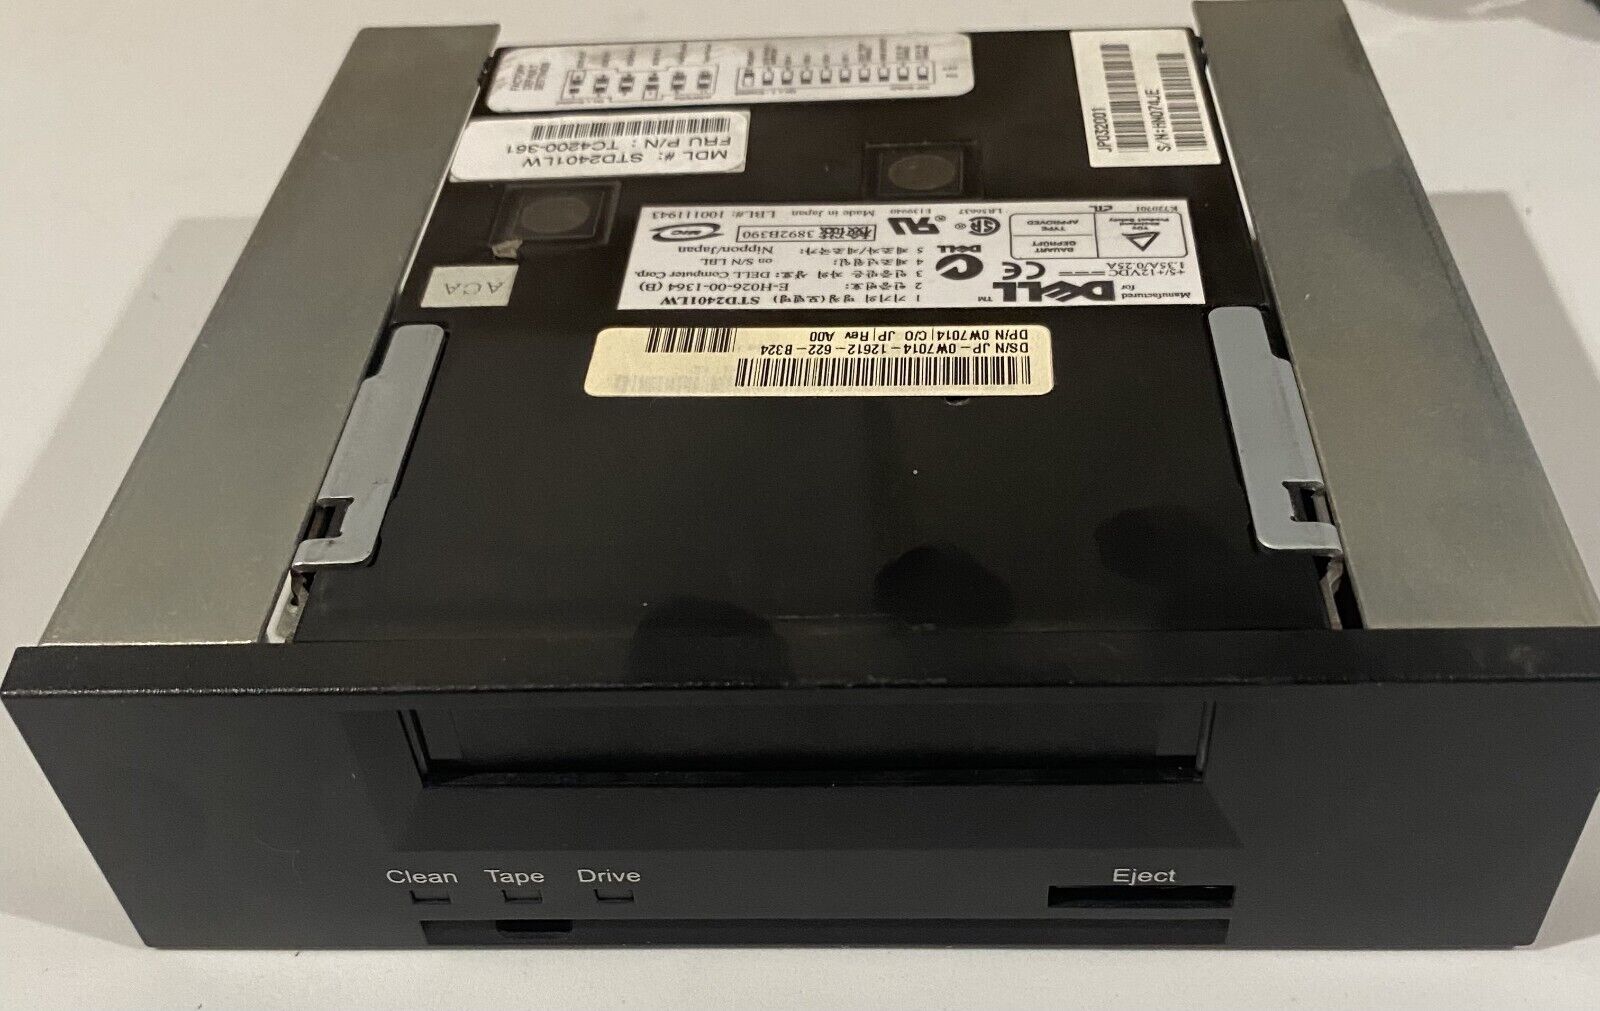 Used Dell IBM Seagate STD2401LW 20/40GB DDS/4 LCD SCSI DAT Internal Tape Drive